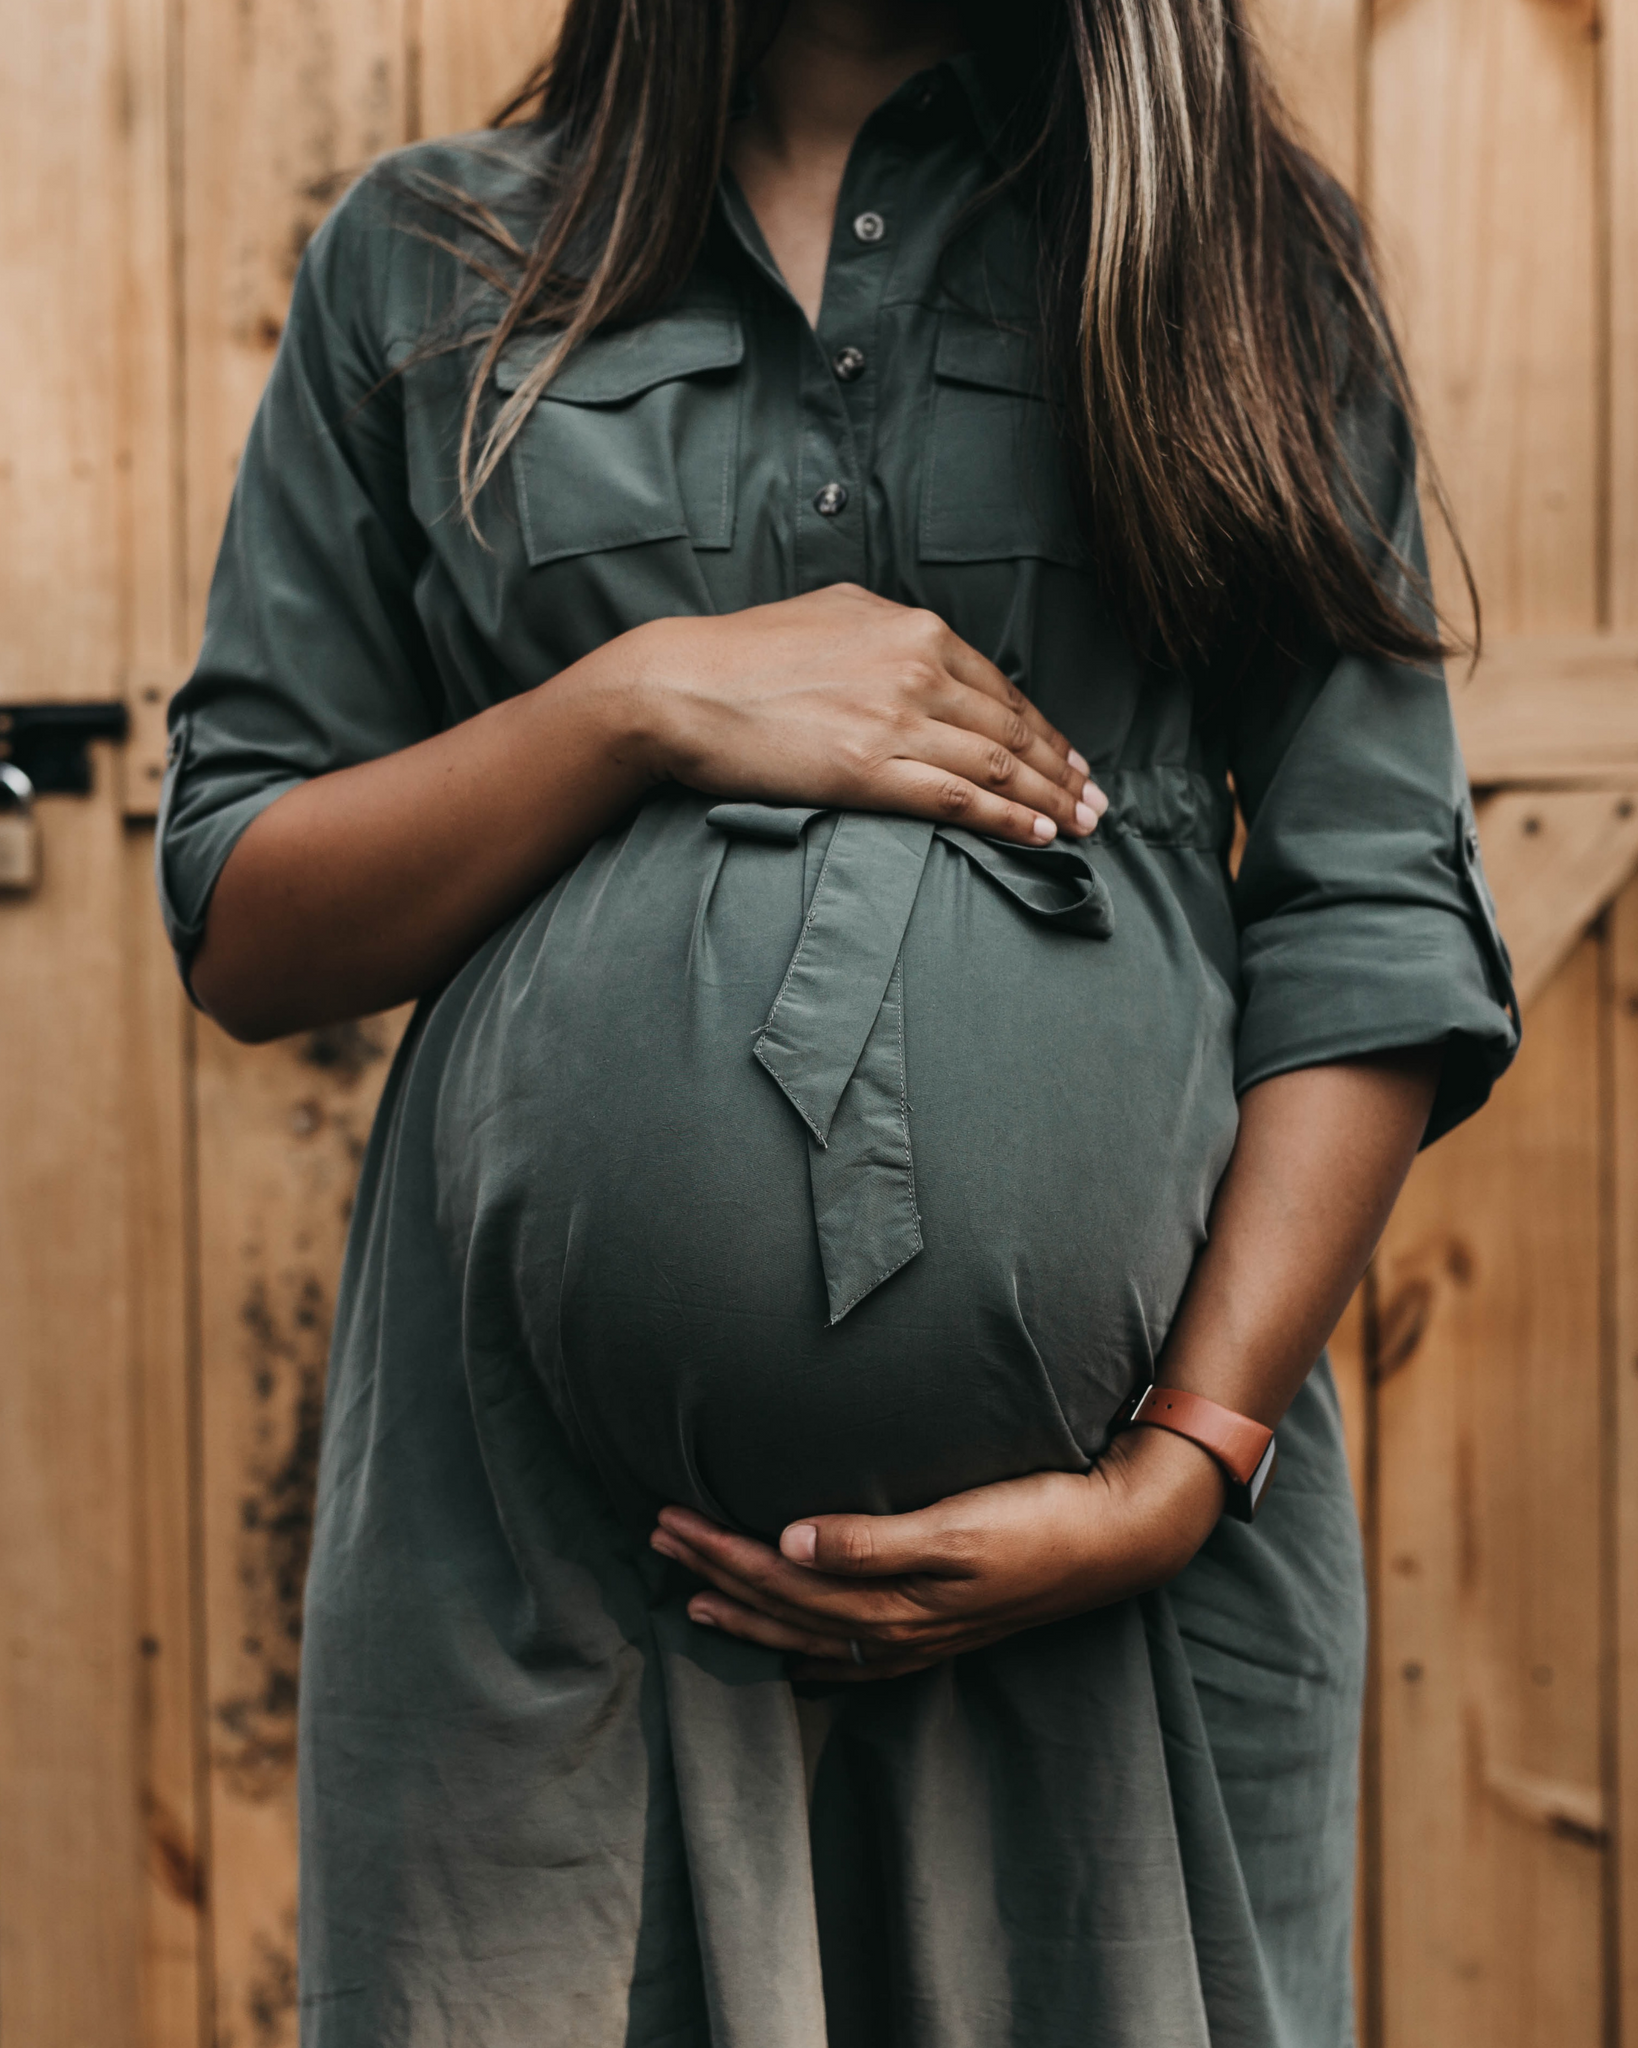 Improve female fertility: woman cradling baby bump